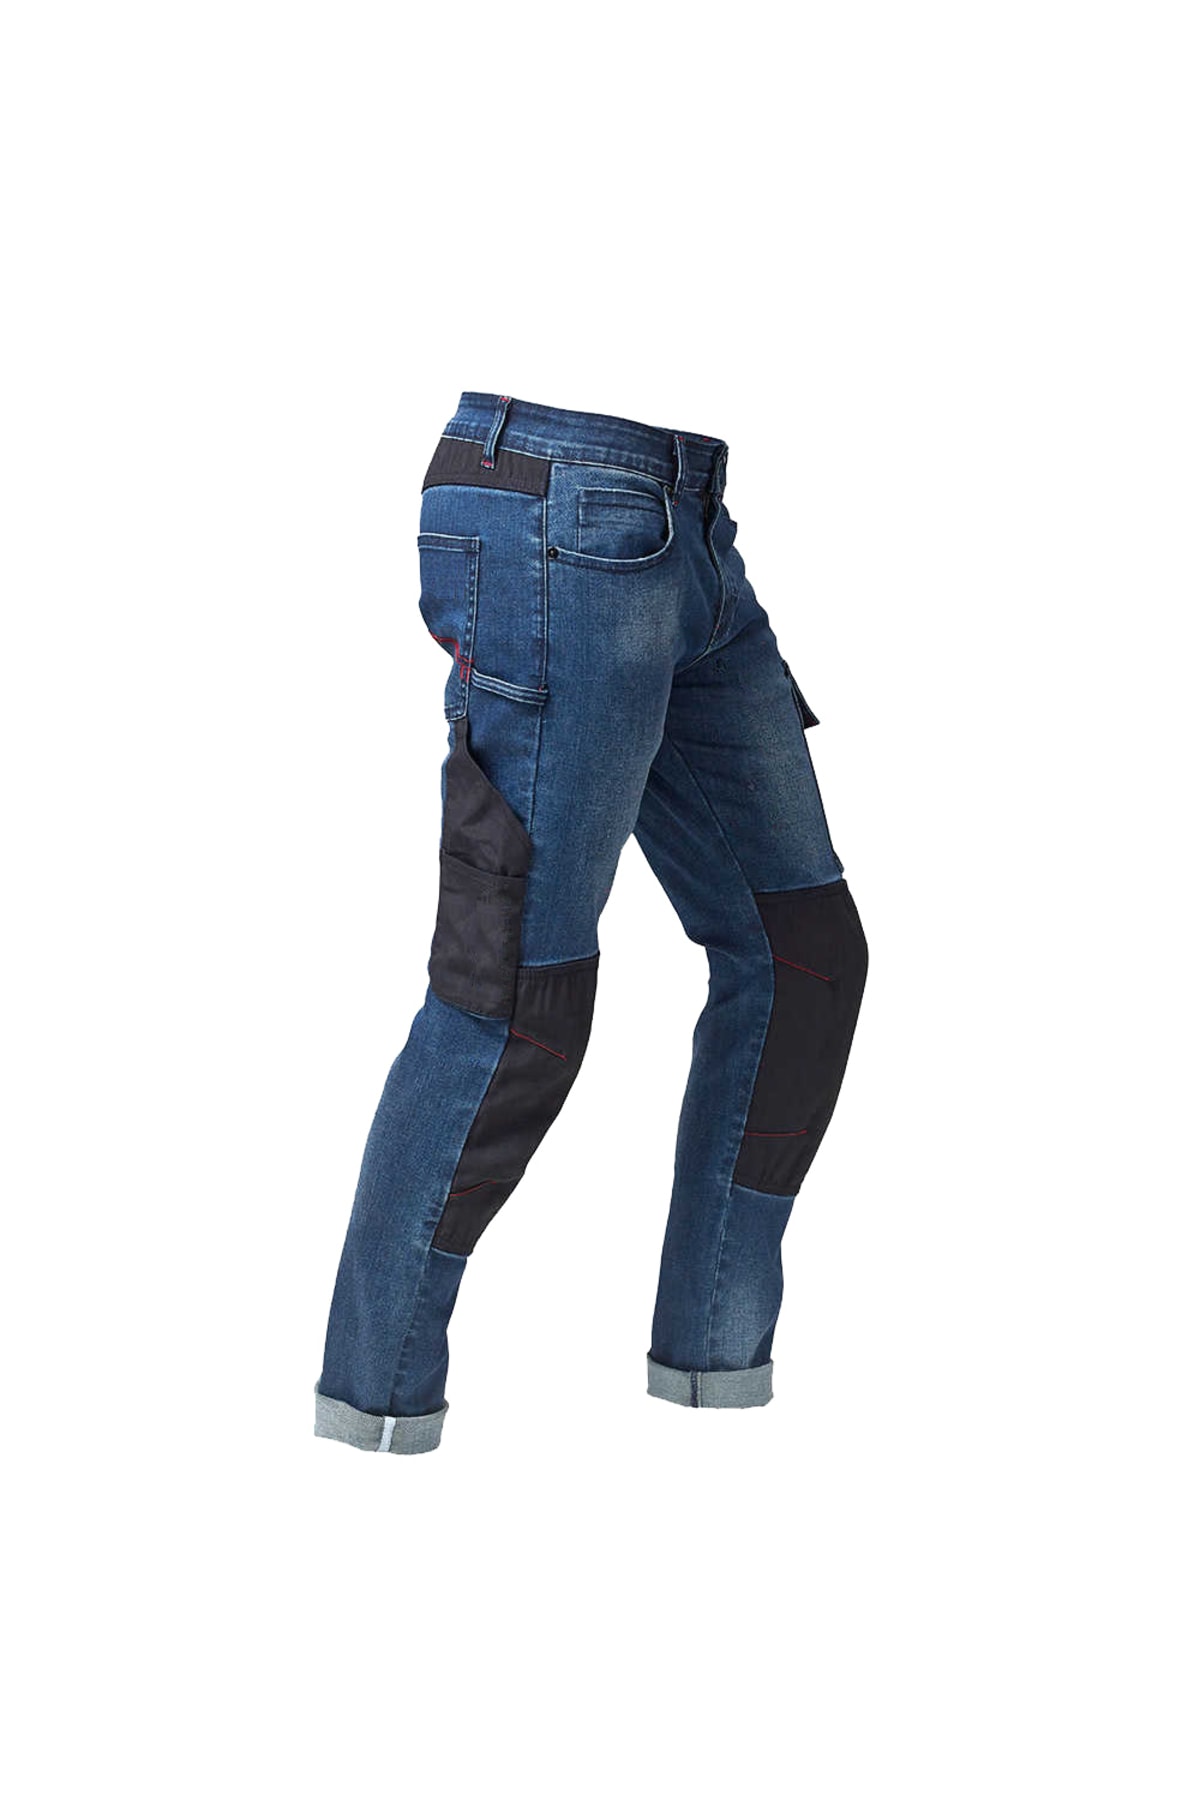 Özel Yapım Siggi Italyan Desing Taktikal Yürüyüş Iş Works Pantolon Jeans Tactical Outdoor Pantolonu AN10830